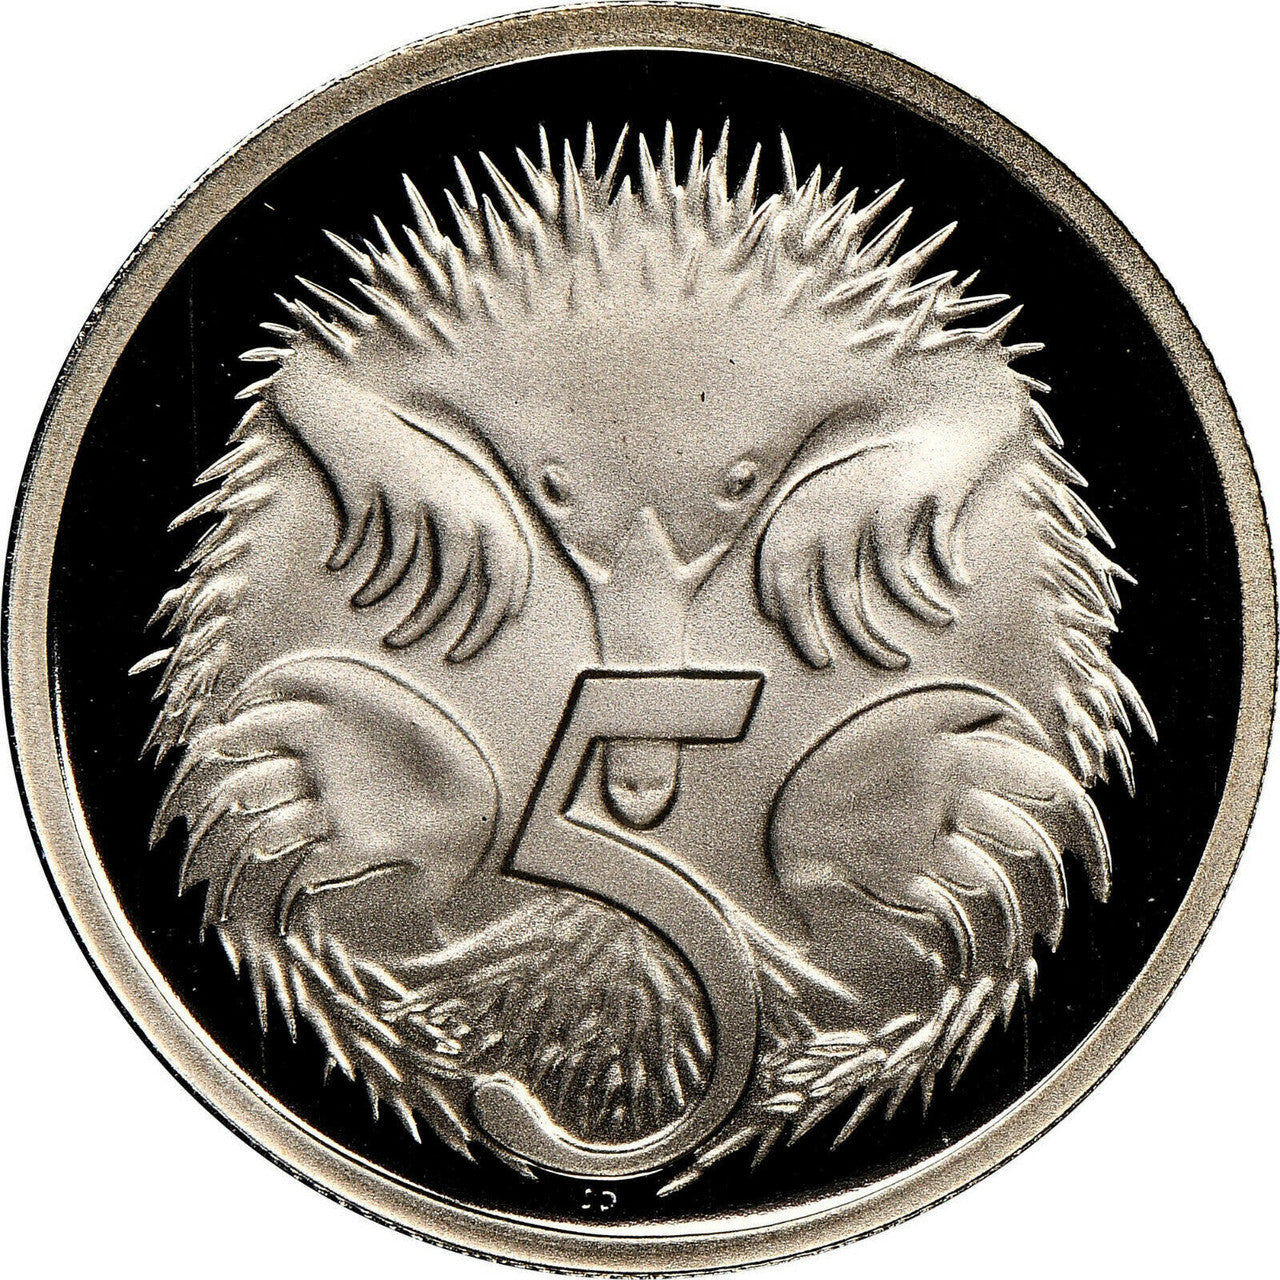 Coin 2023 Echidna 5 cents Proof 5c ex Royal Australian Mint Proof Set UNC